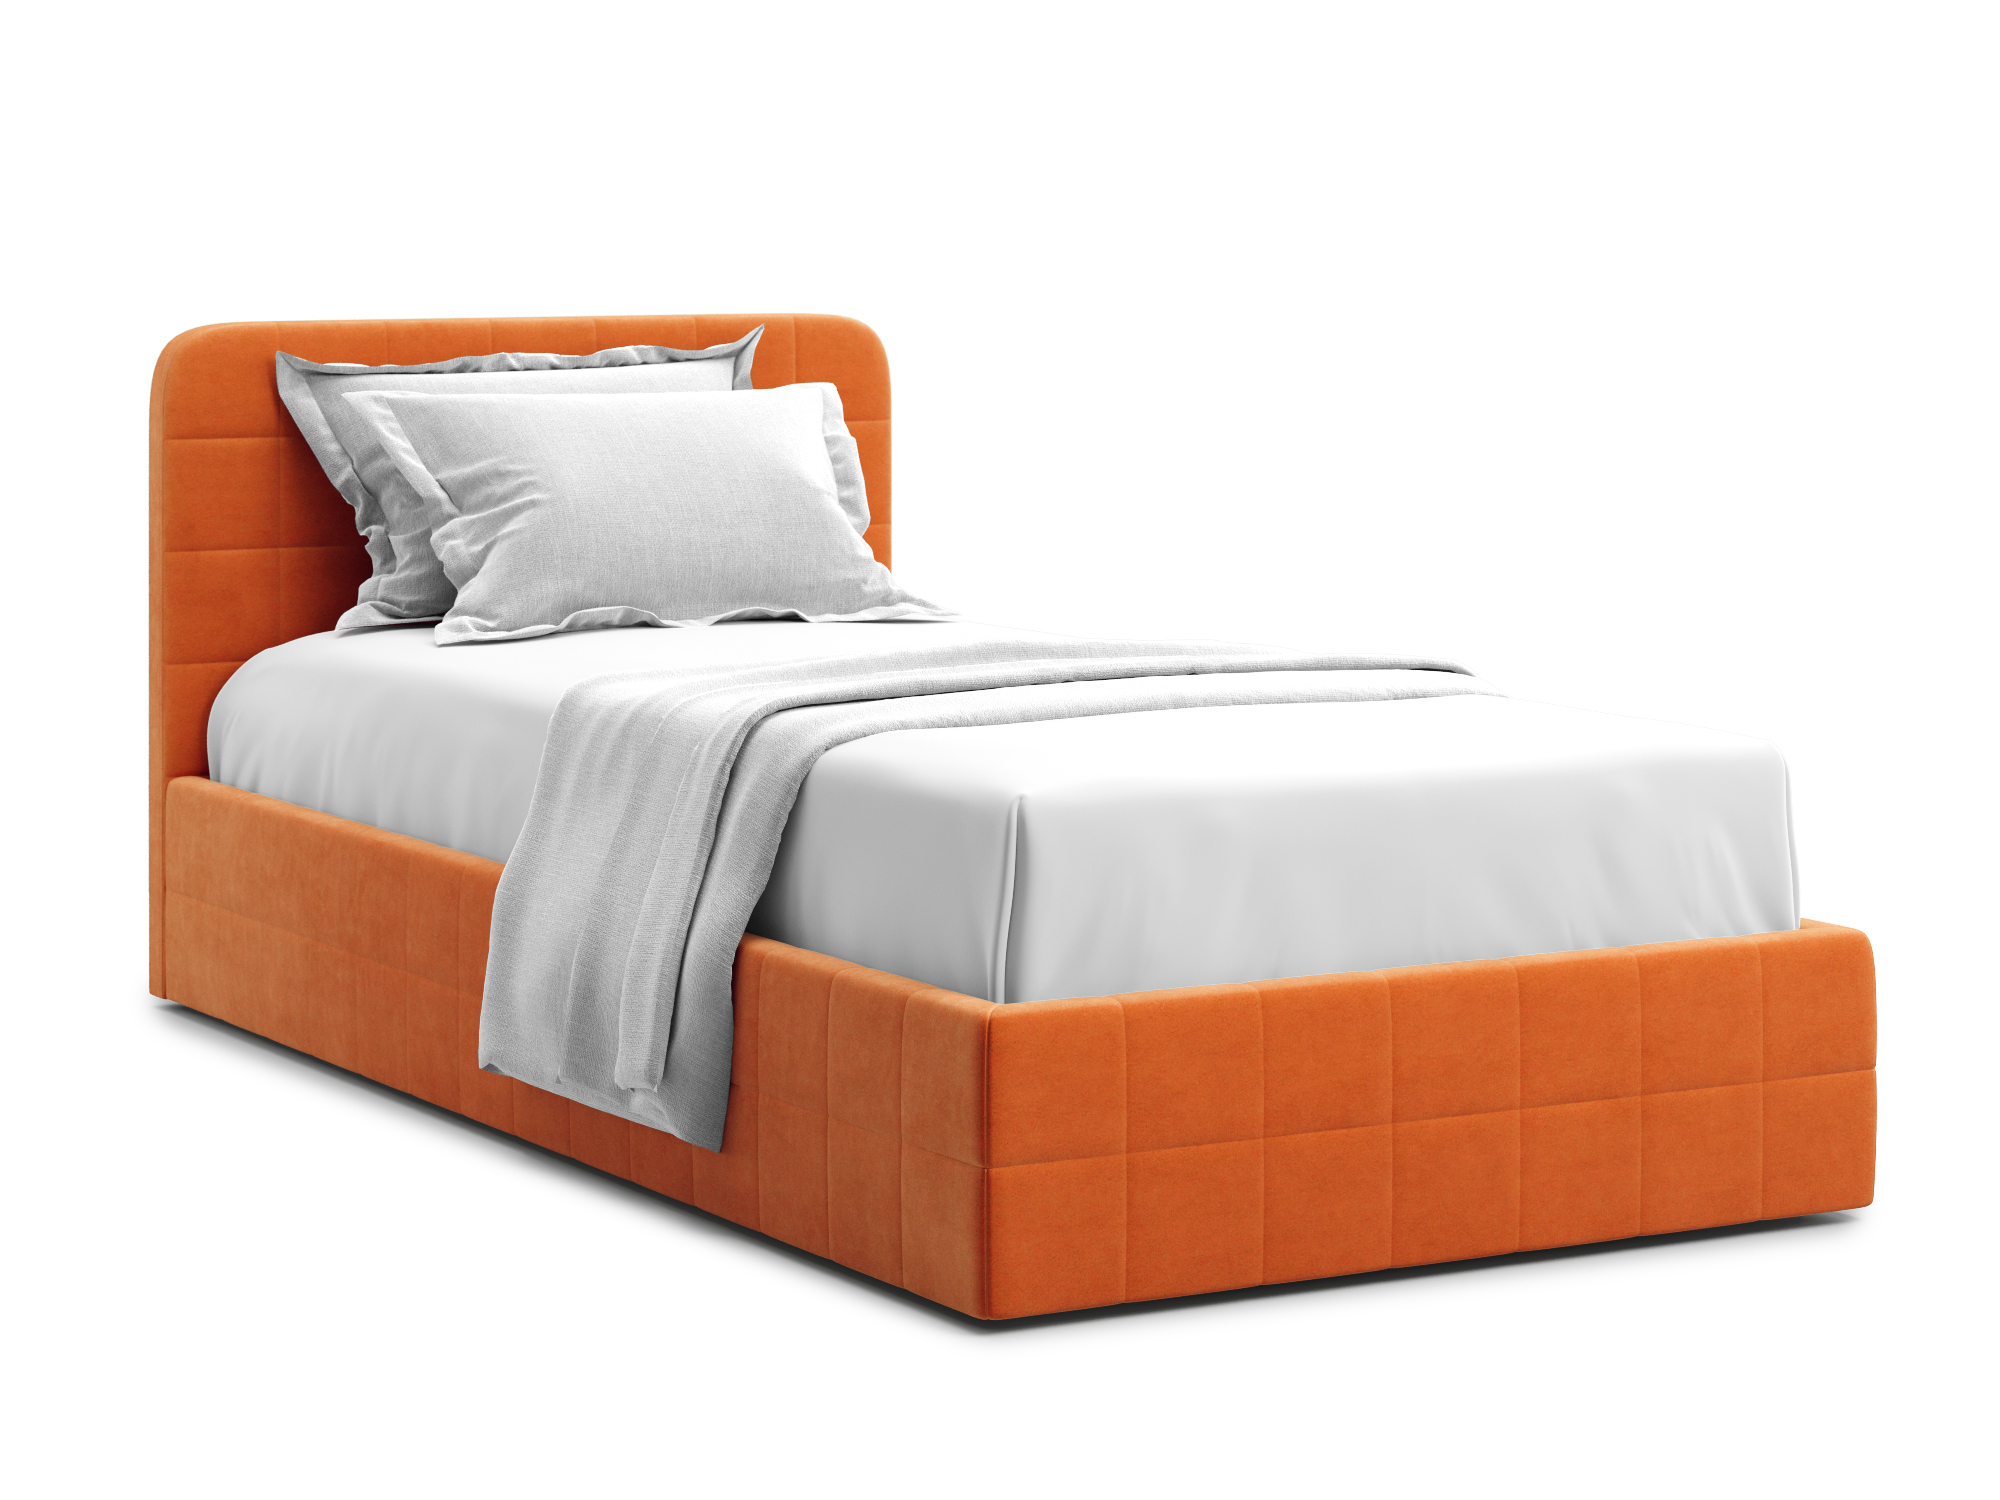 Кровать Adda 90 Velutto 27 Оранжевый, Массив, ДСП кровать adda 90 velutto 22 коричневый массив дсп